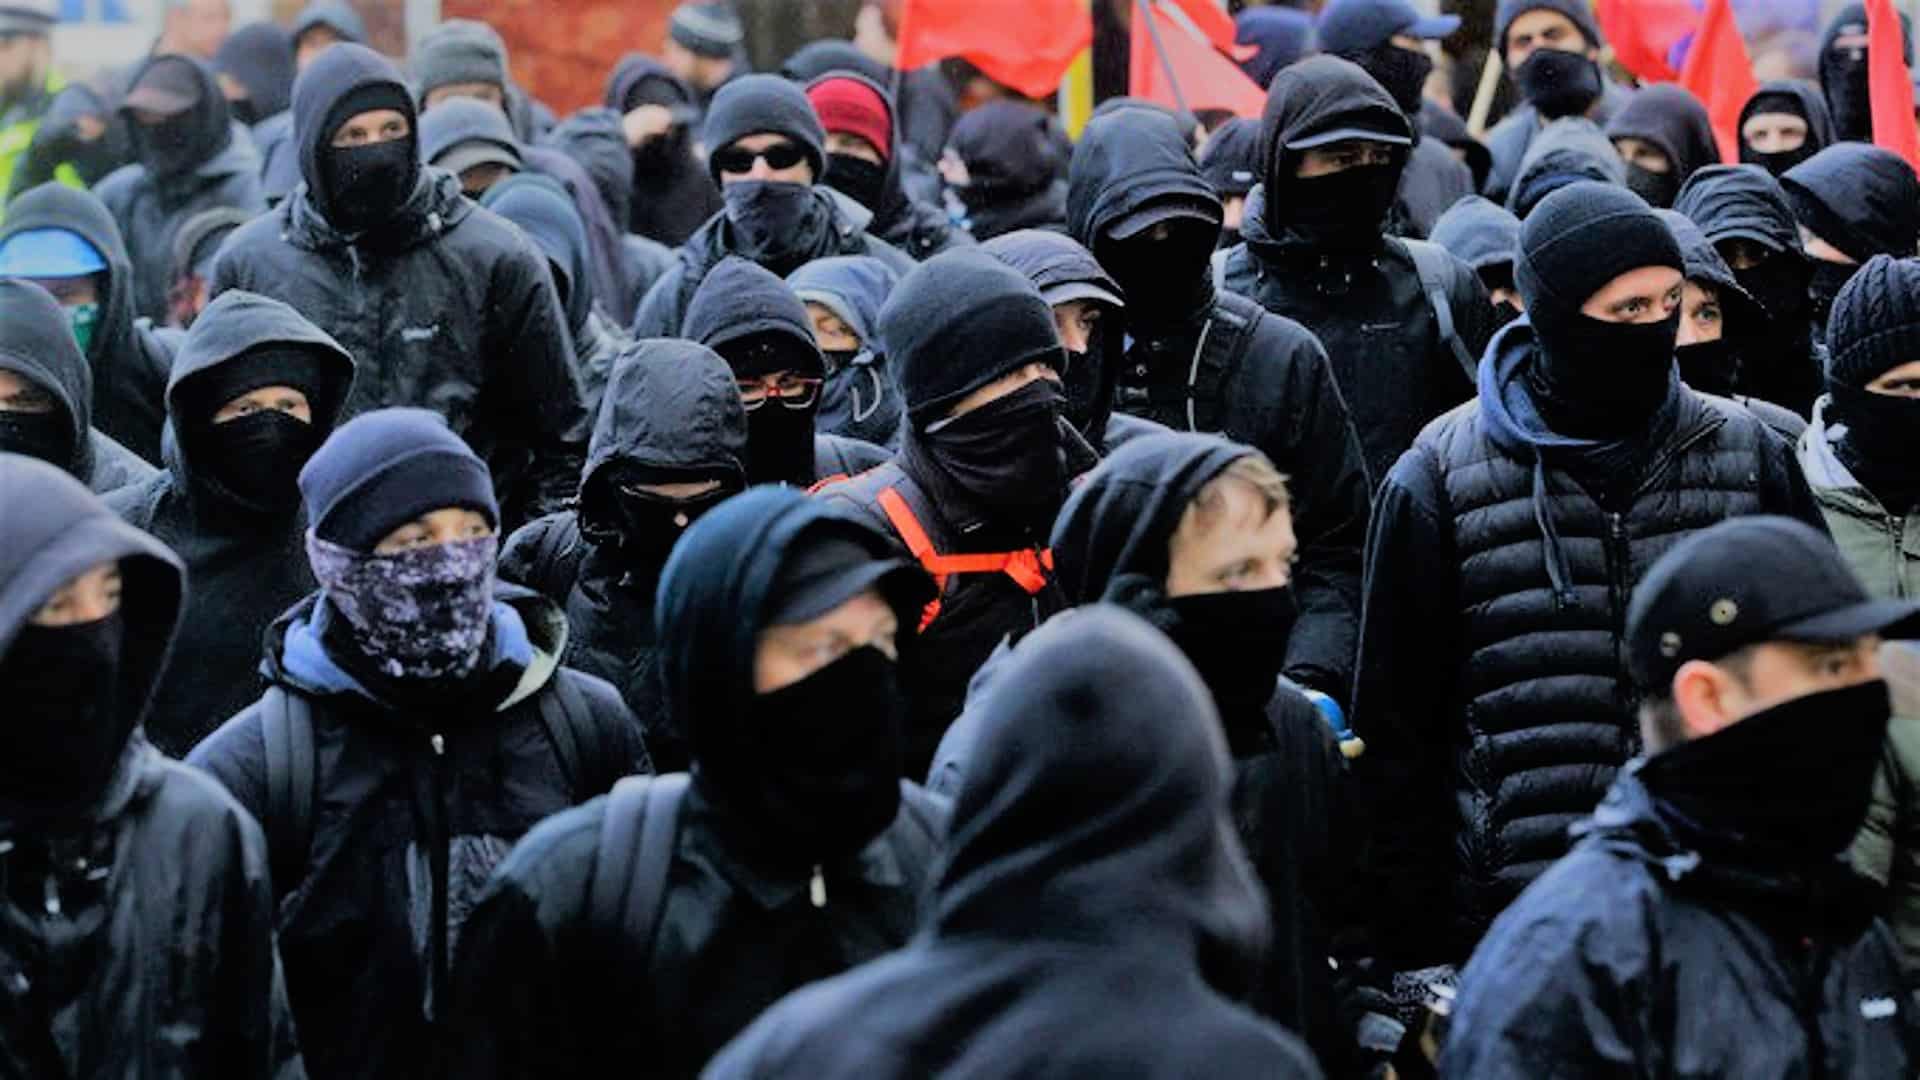 Antifa: Anarchists or Communists?